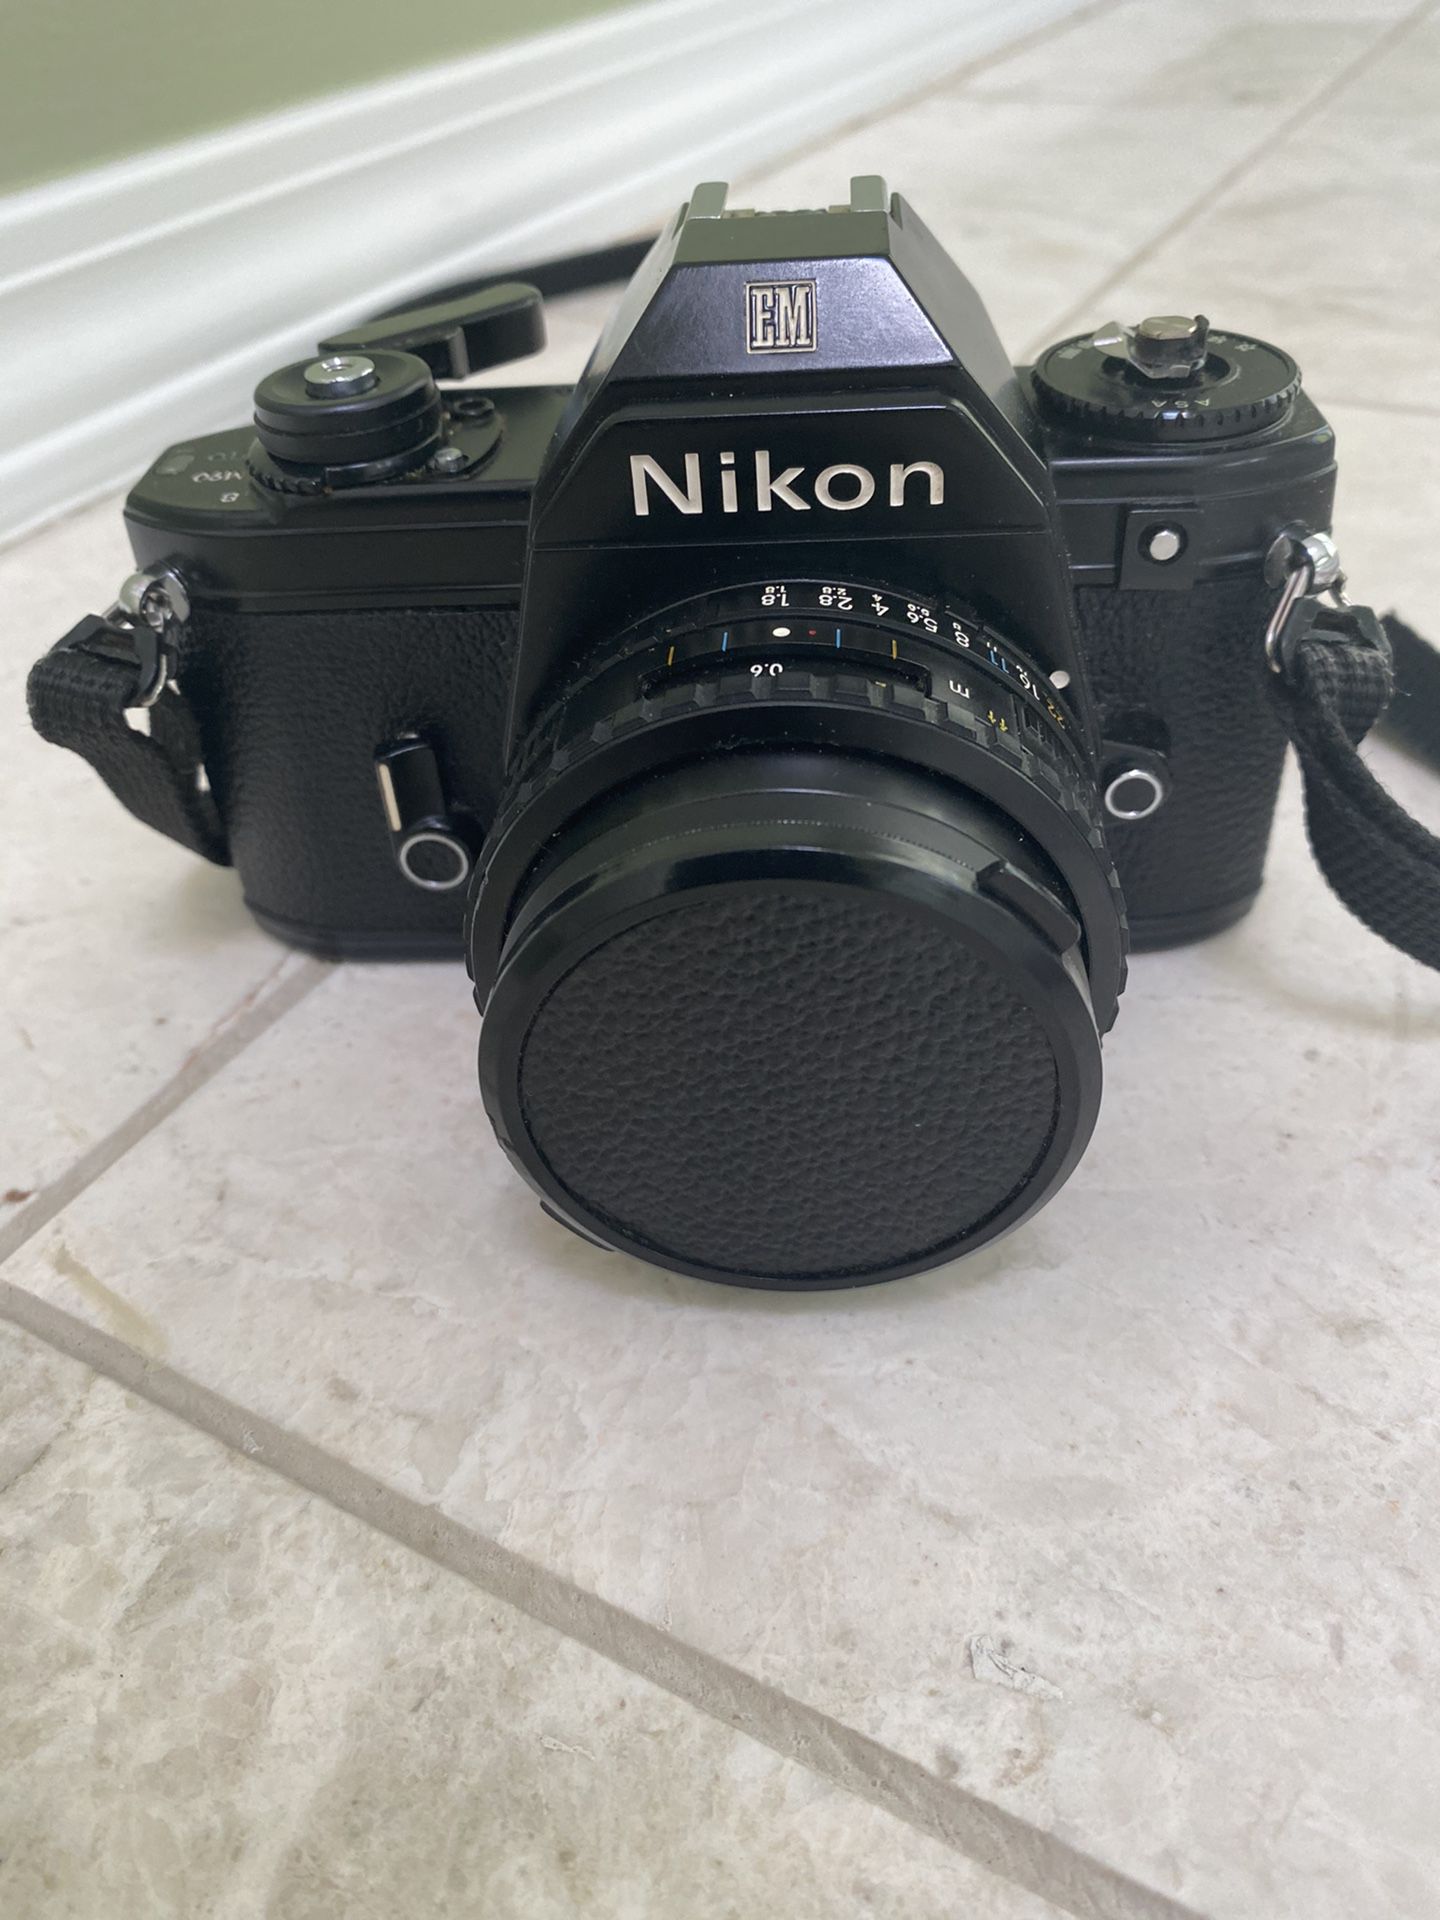 Nikon EM 35mm film camera with 50mm lens and Case